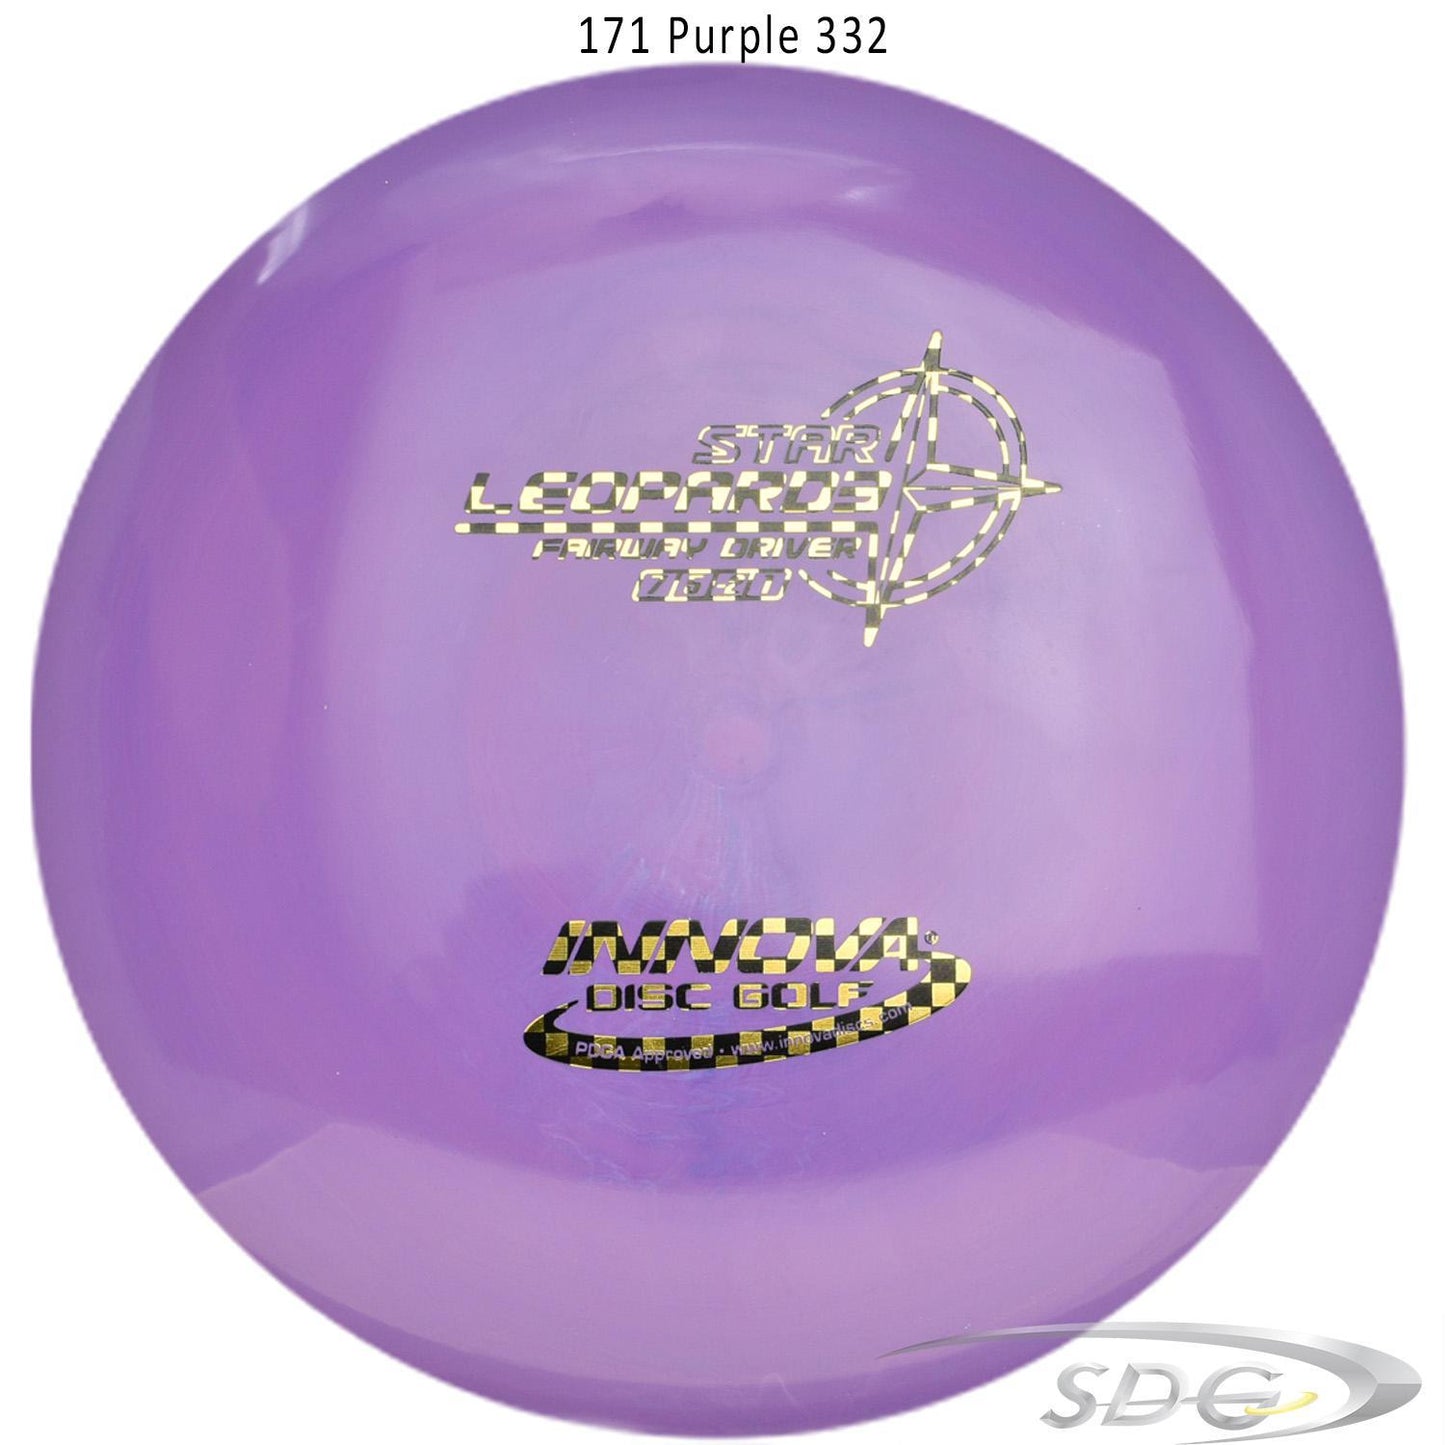 innova-star-leopard3-disc-golf-fairway-driver 171 Purple 332 